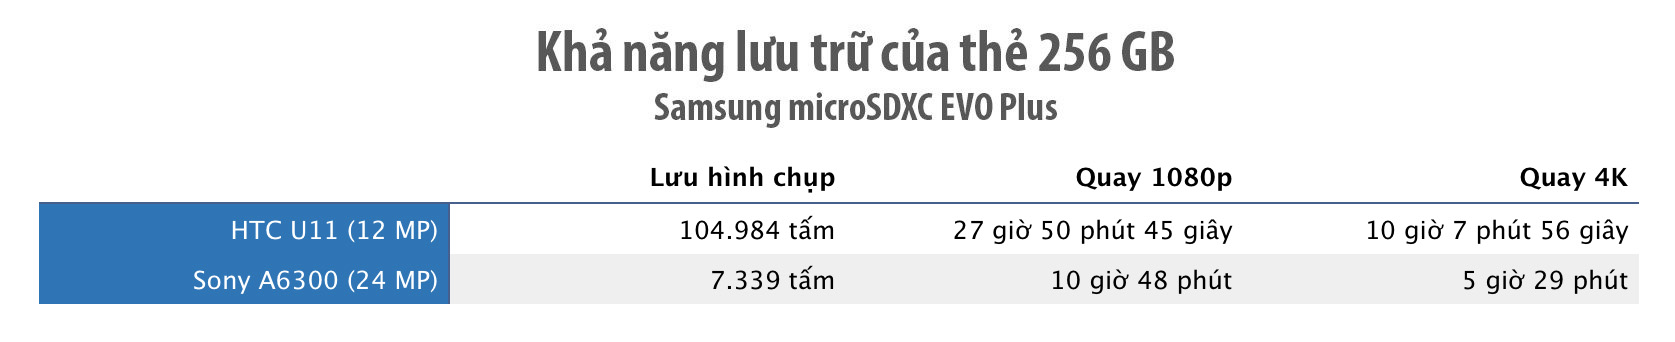 Samsung-microSDXC-EVO-Plus-tinhte-2.jpg